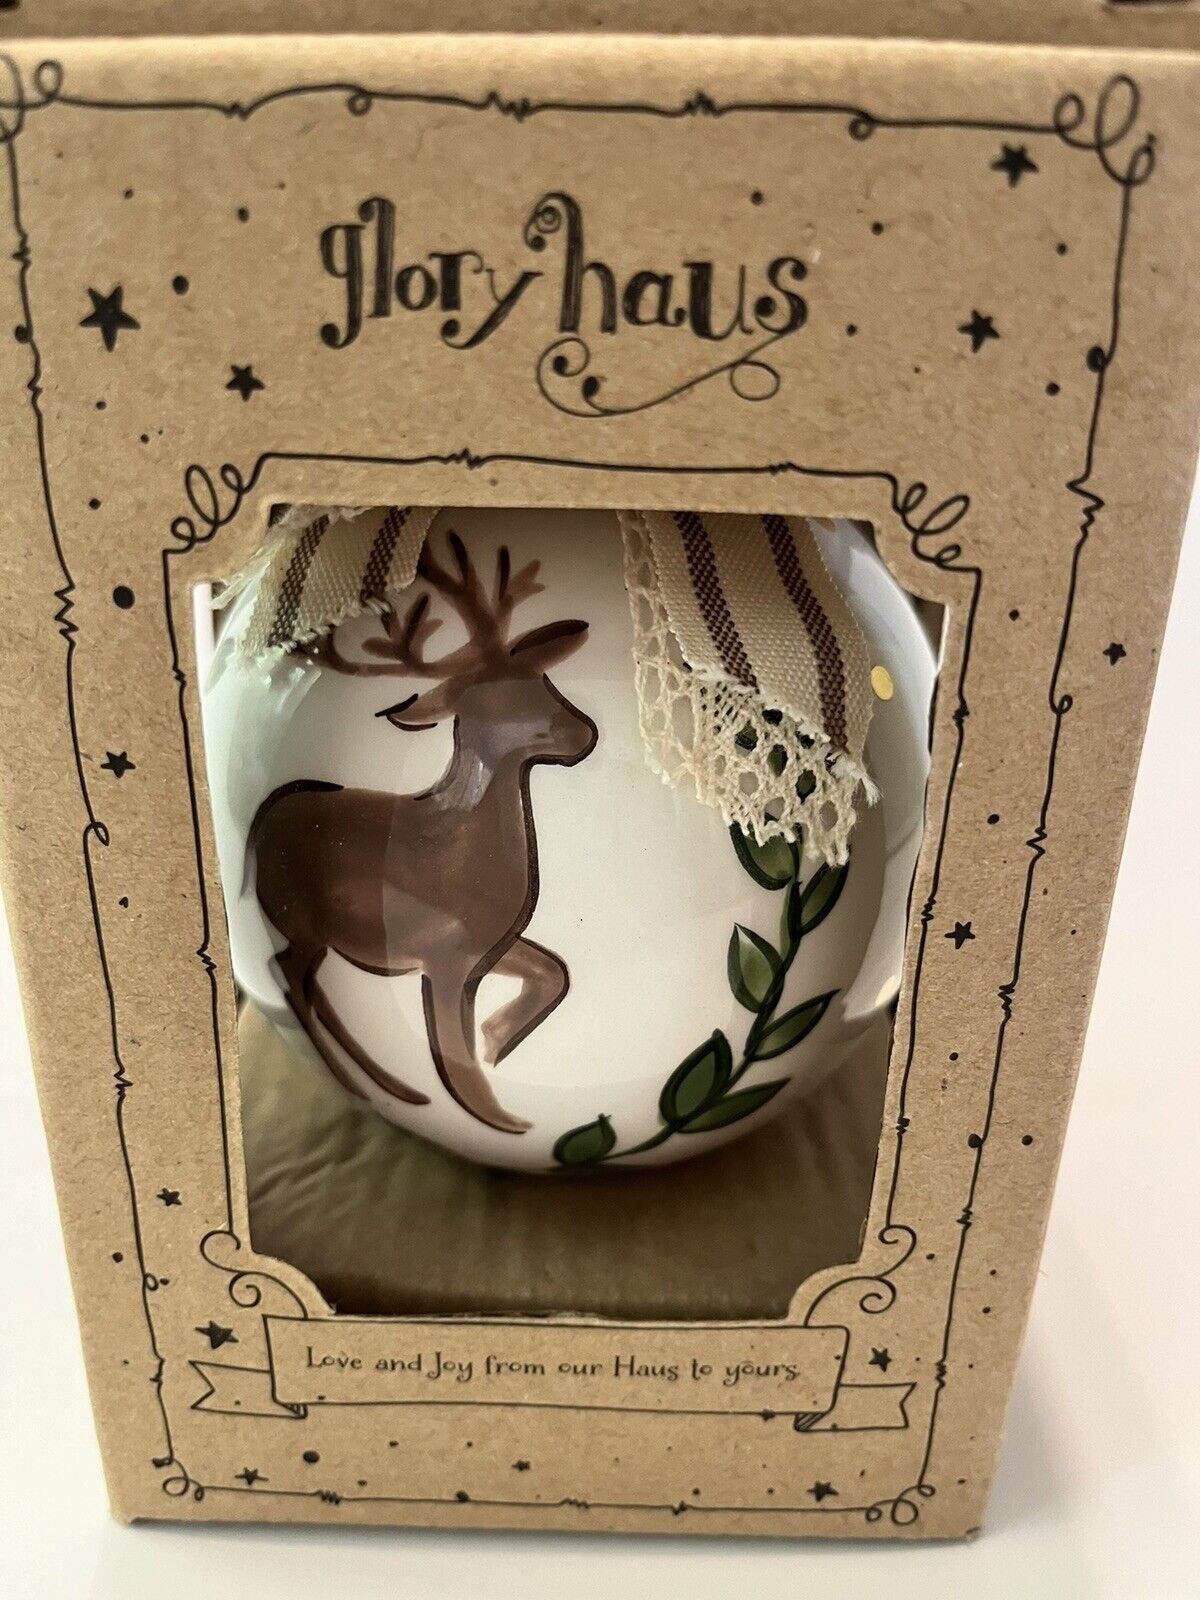 Merry Christmas Ya'll Ornament Reindeer And Laurel - Glory Haus